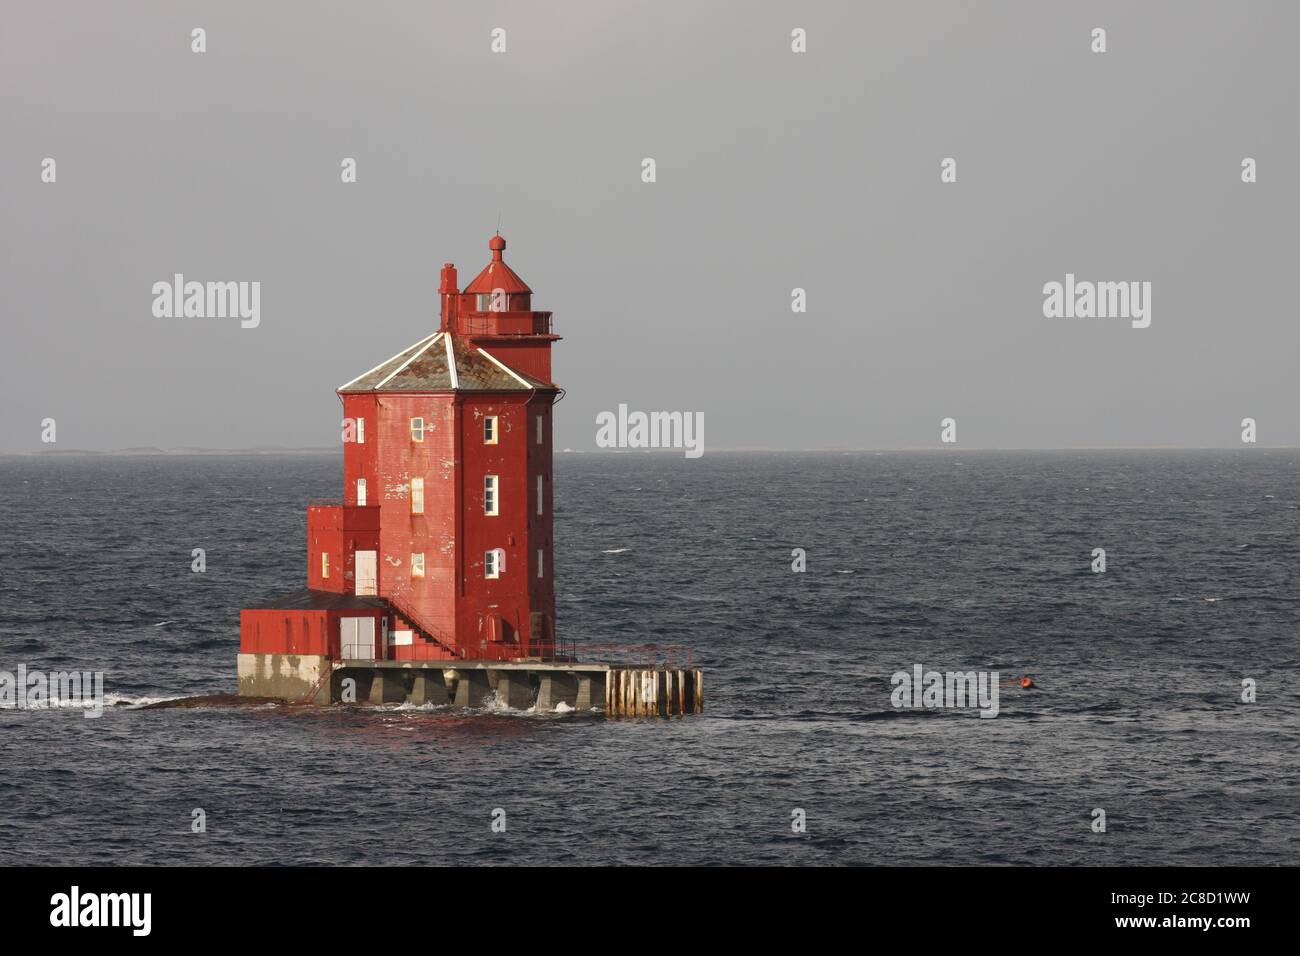 Kjeungskjær lighthouse, Norway Stock Photo